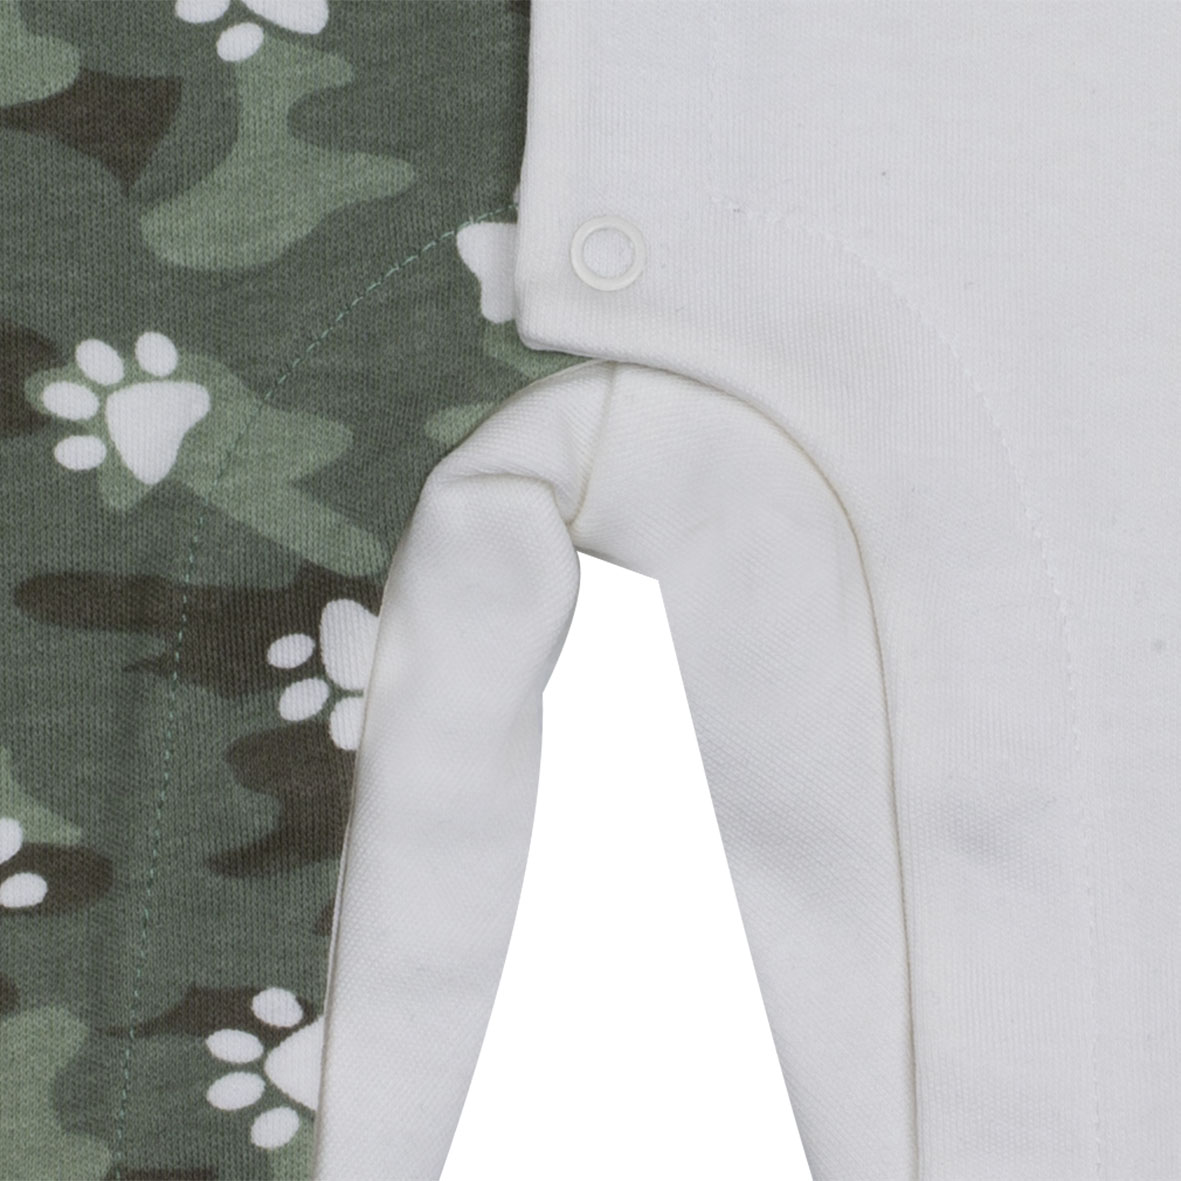 Mawi tutine gamba lunga interlock inserto camouflage1m - Mawi